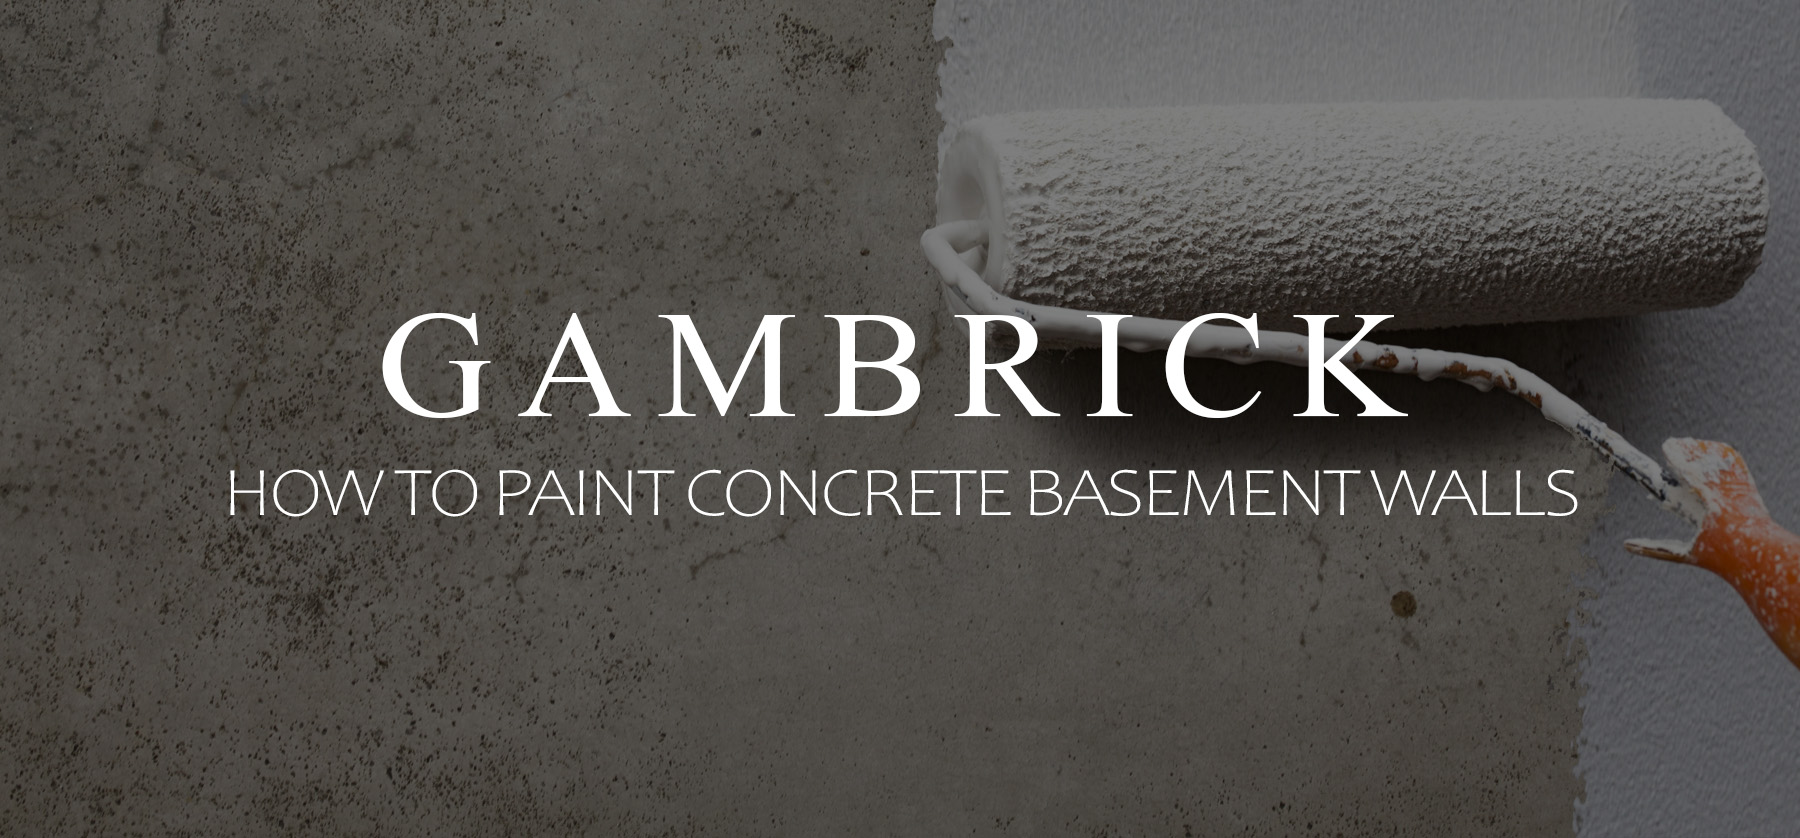 how to paint concrete basement walls banner